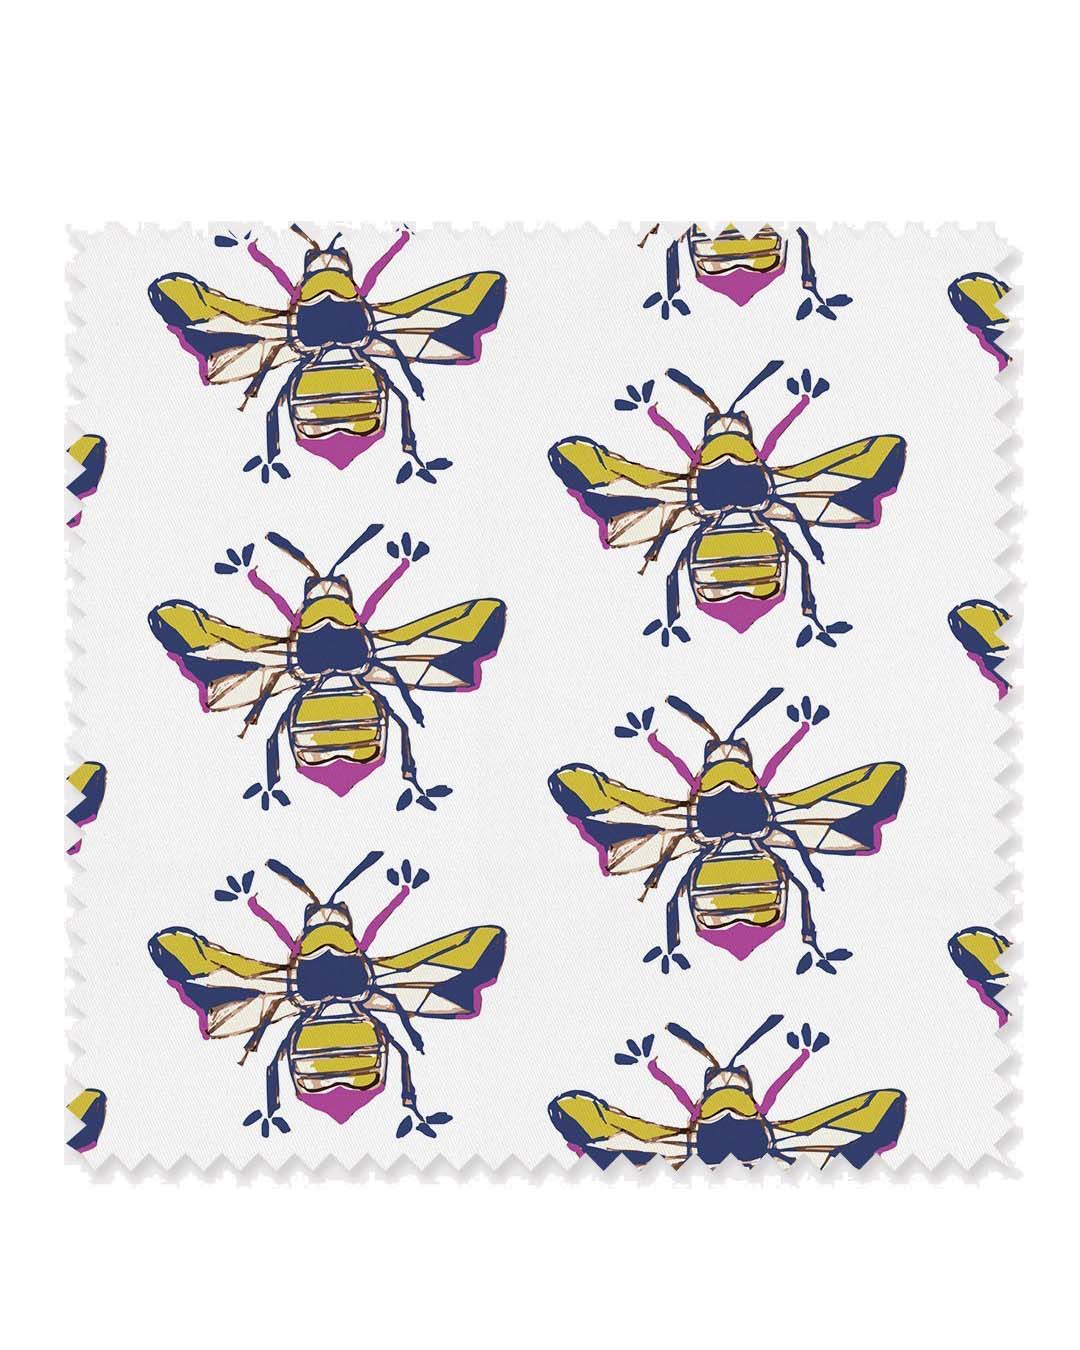 Bees Knees Fabric Fabric Katie Kime